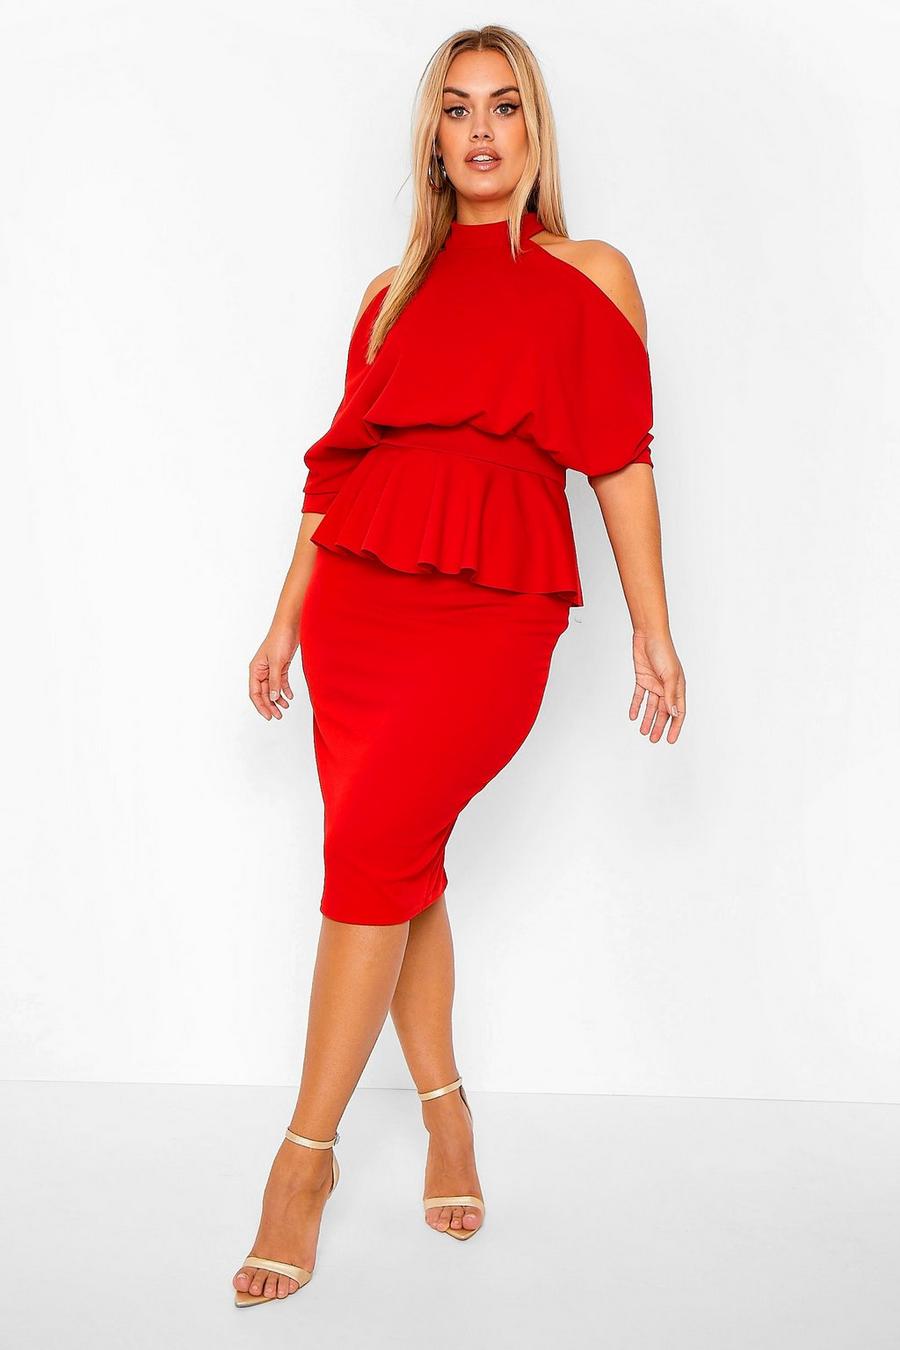 Plus Size Peplum Dress - Ivory - ShopperBoard